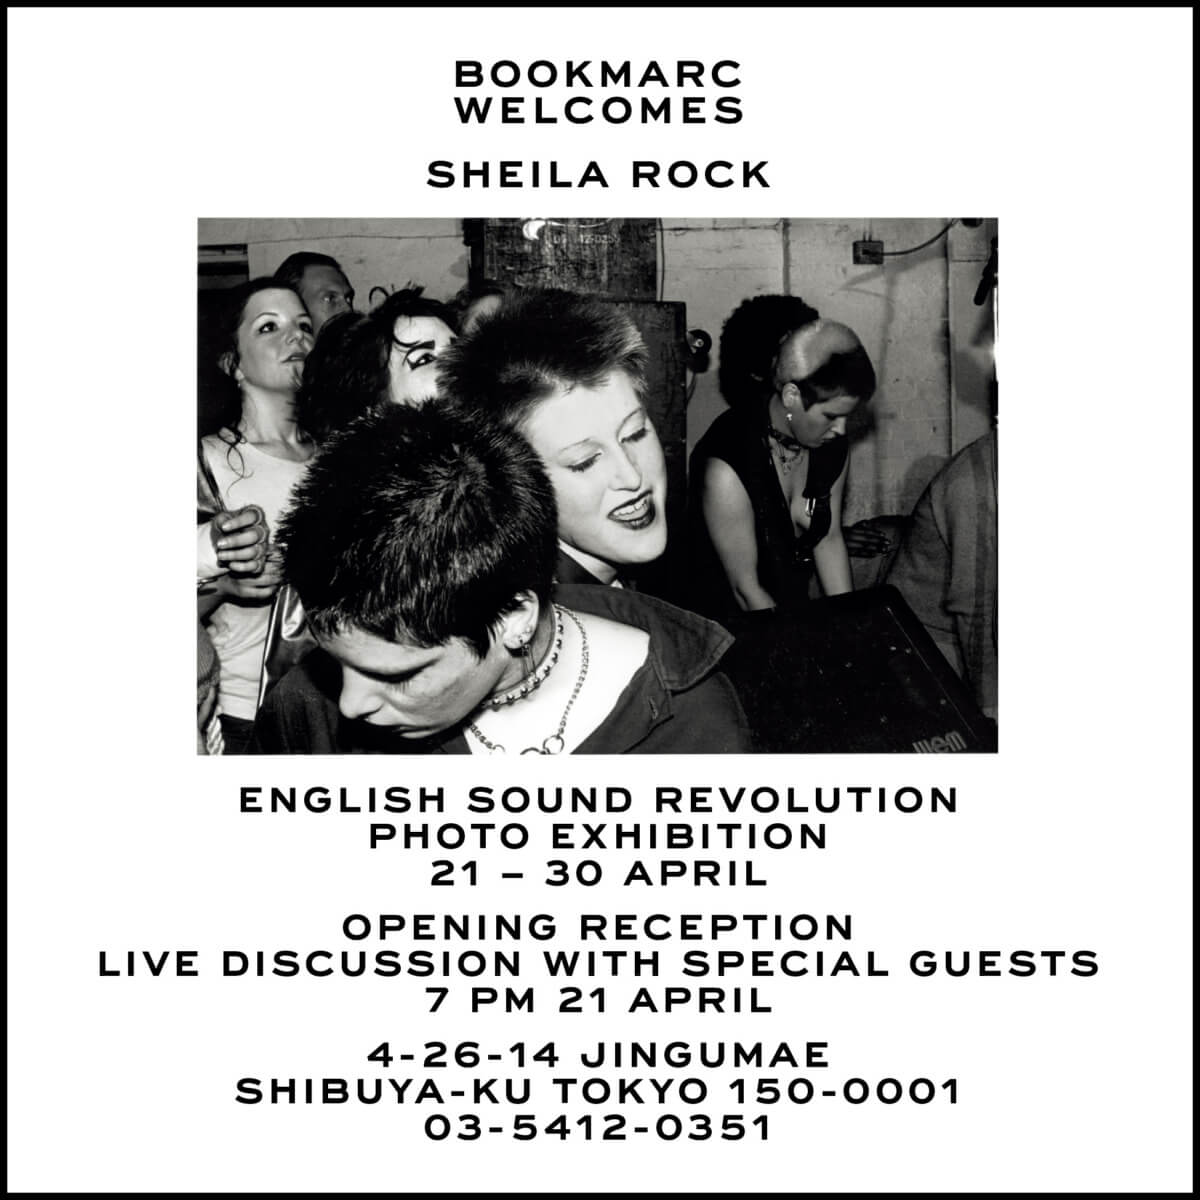 Sheila Rock “ENGLISH SOUND REVOLUTION” Photo Exhibition